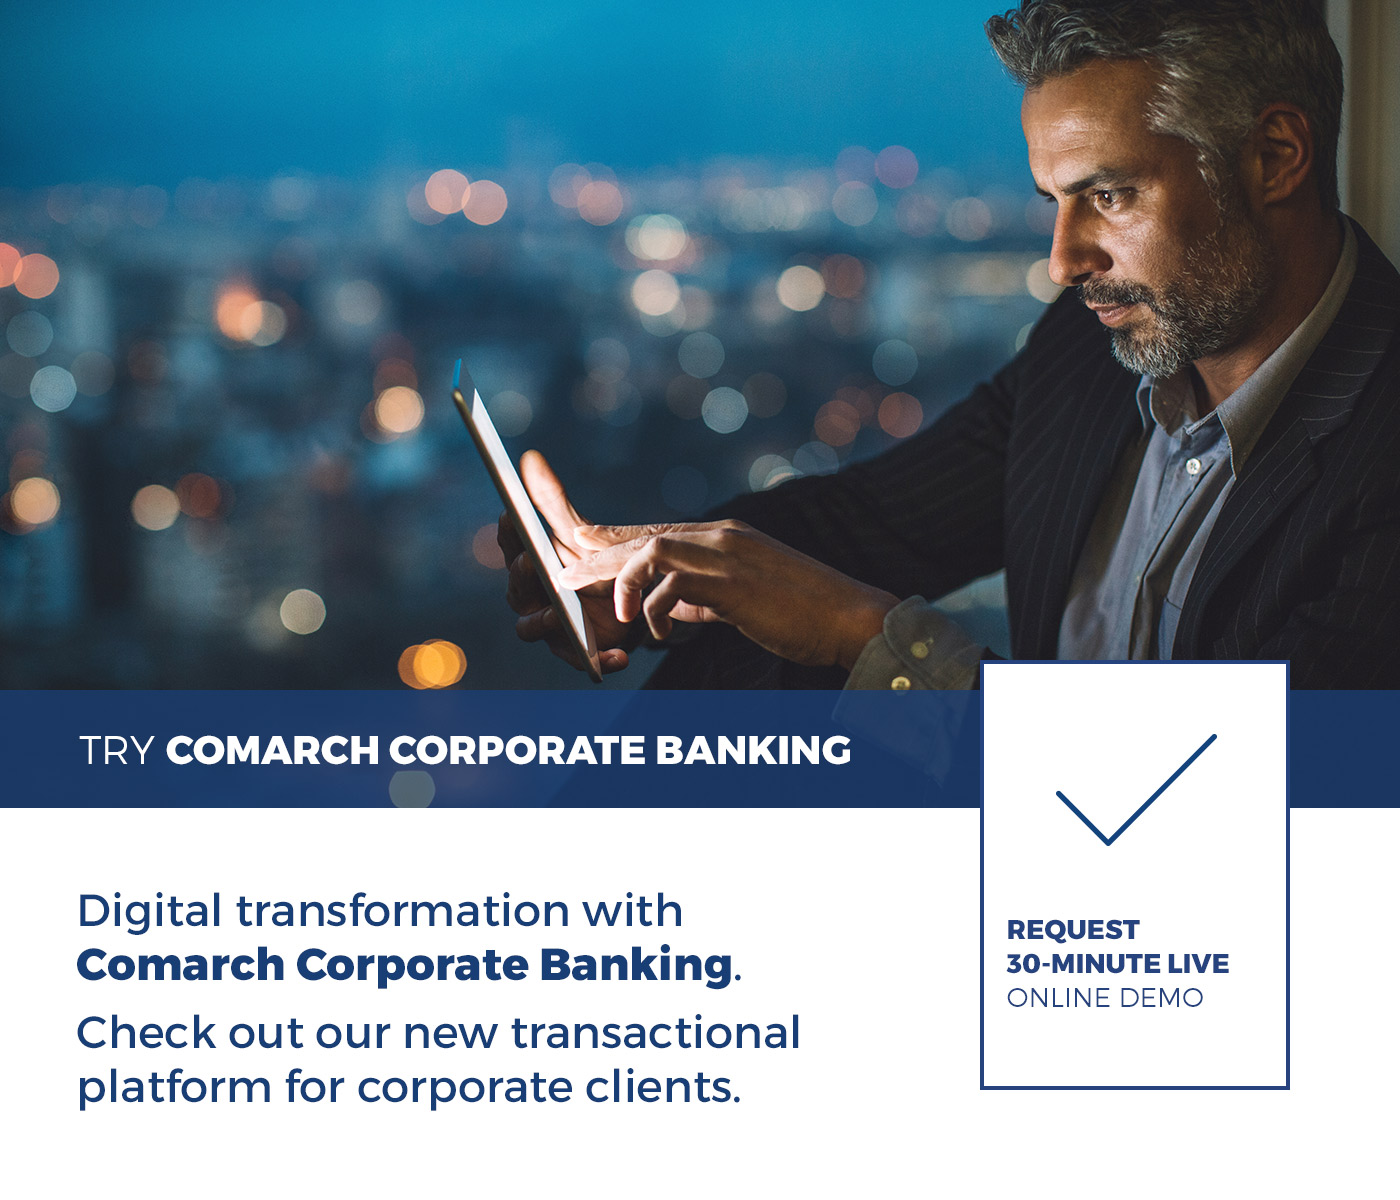 Request Comarch Corporate Banking live demo